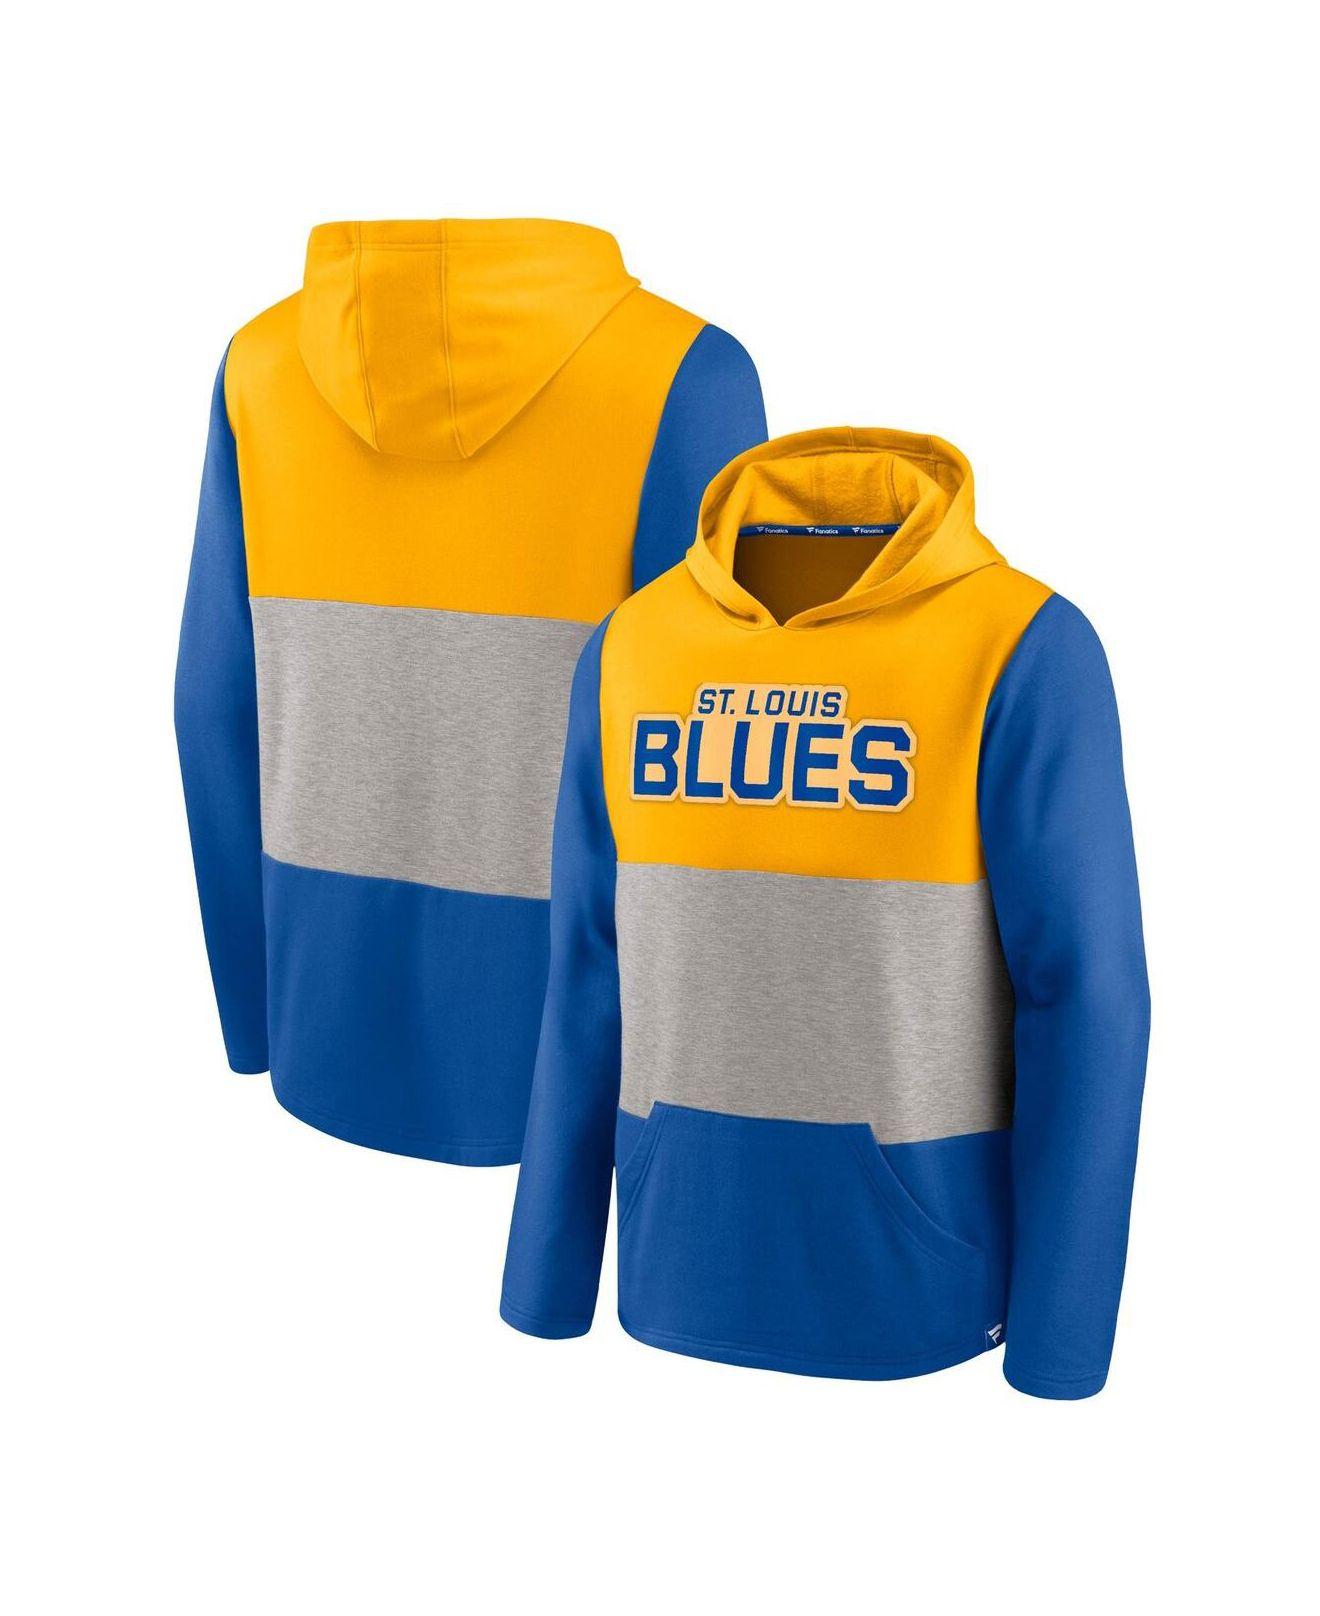 St. Louis Blues Men's Hoodies & Jackets